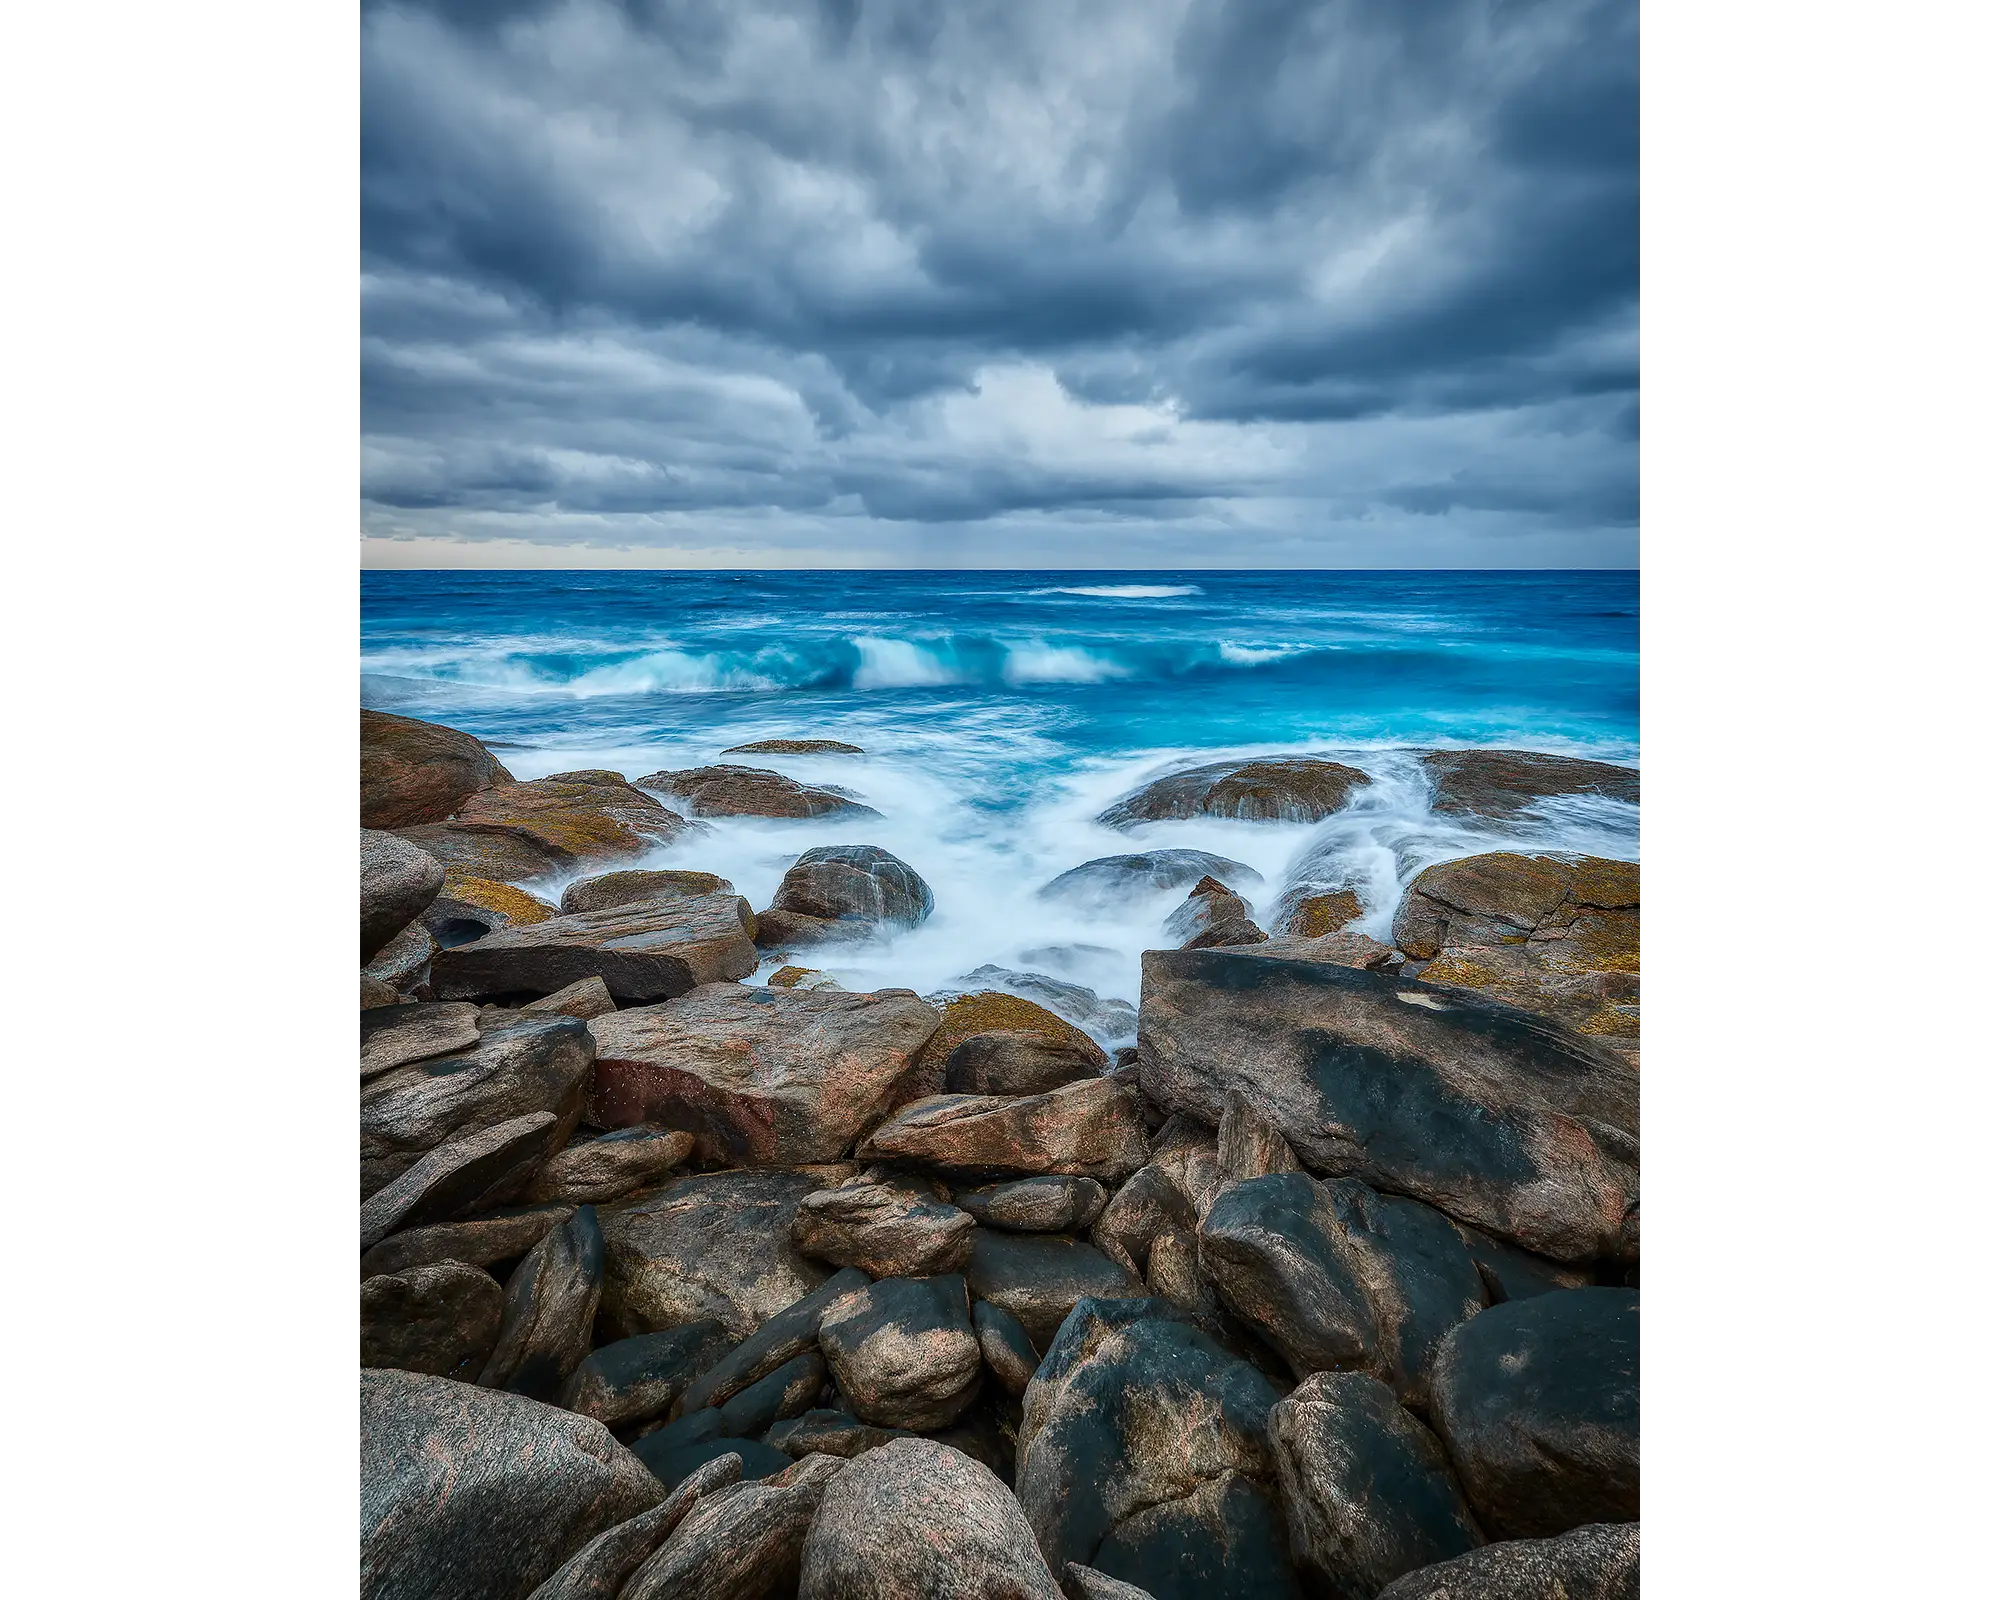 Wild West - Incoming storm, Redgate Beach, Western Australia.